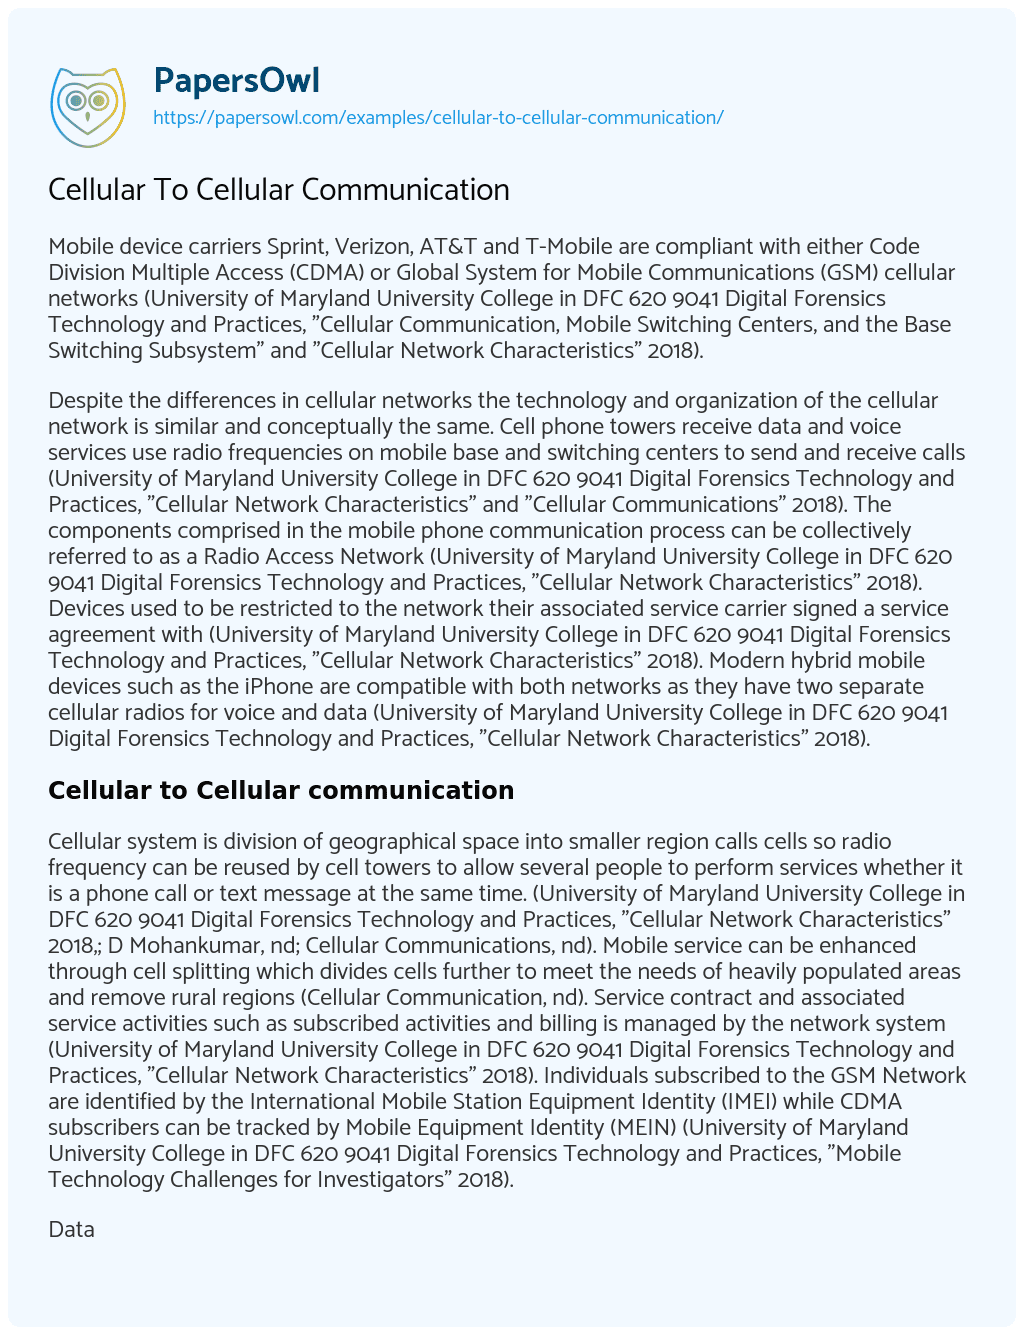 Cellular to Cellular Communication essay